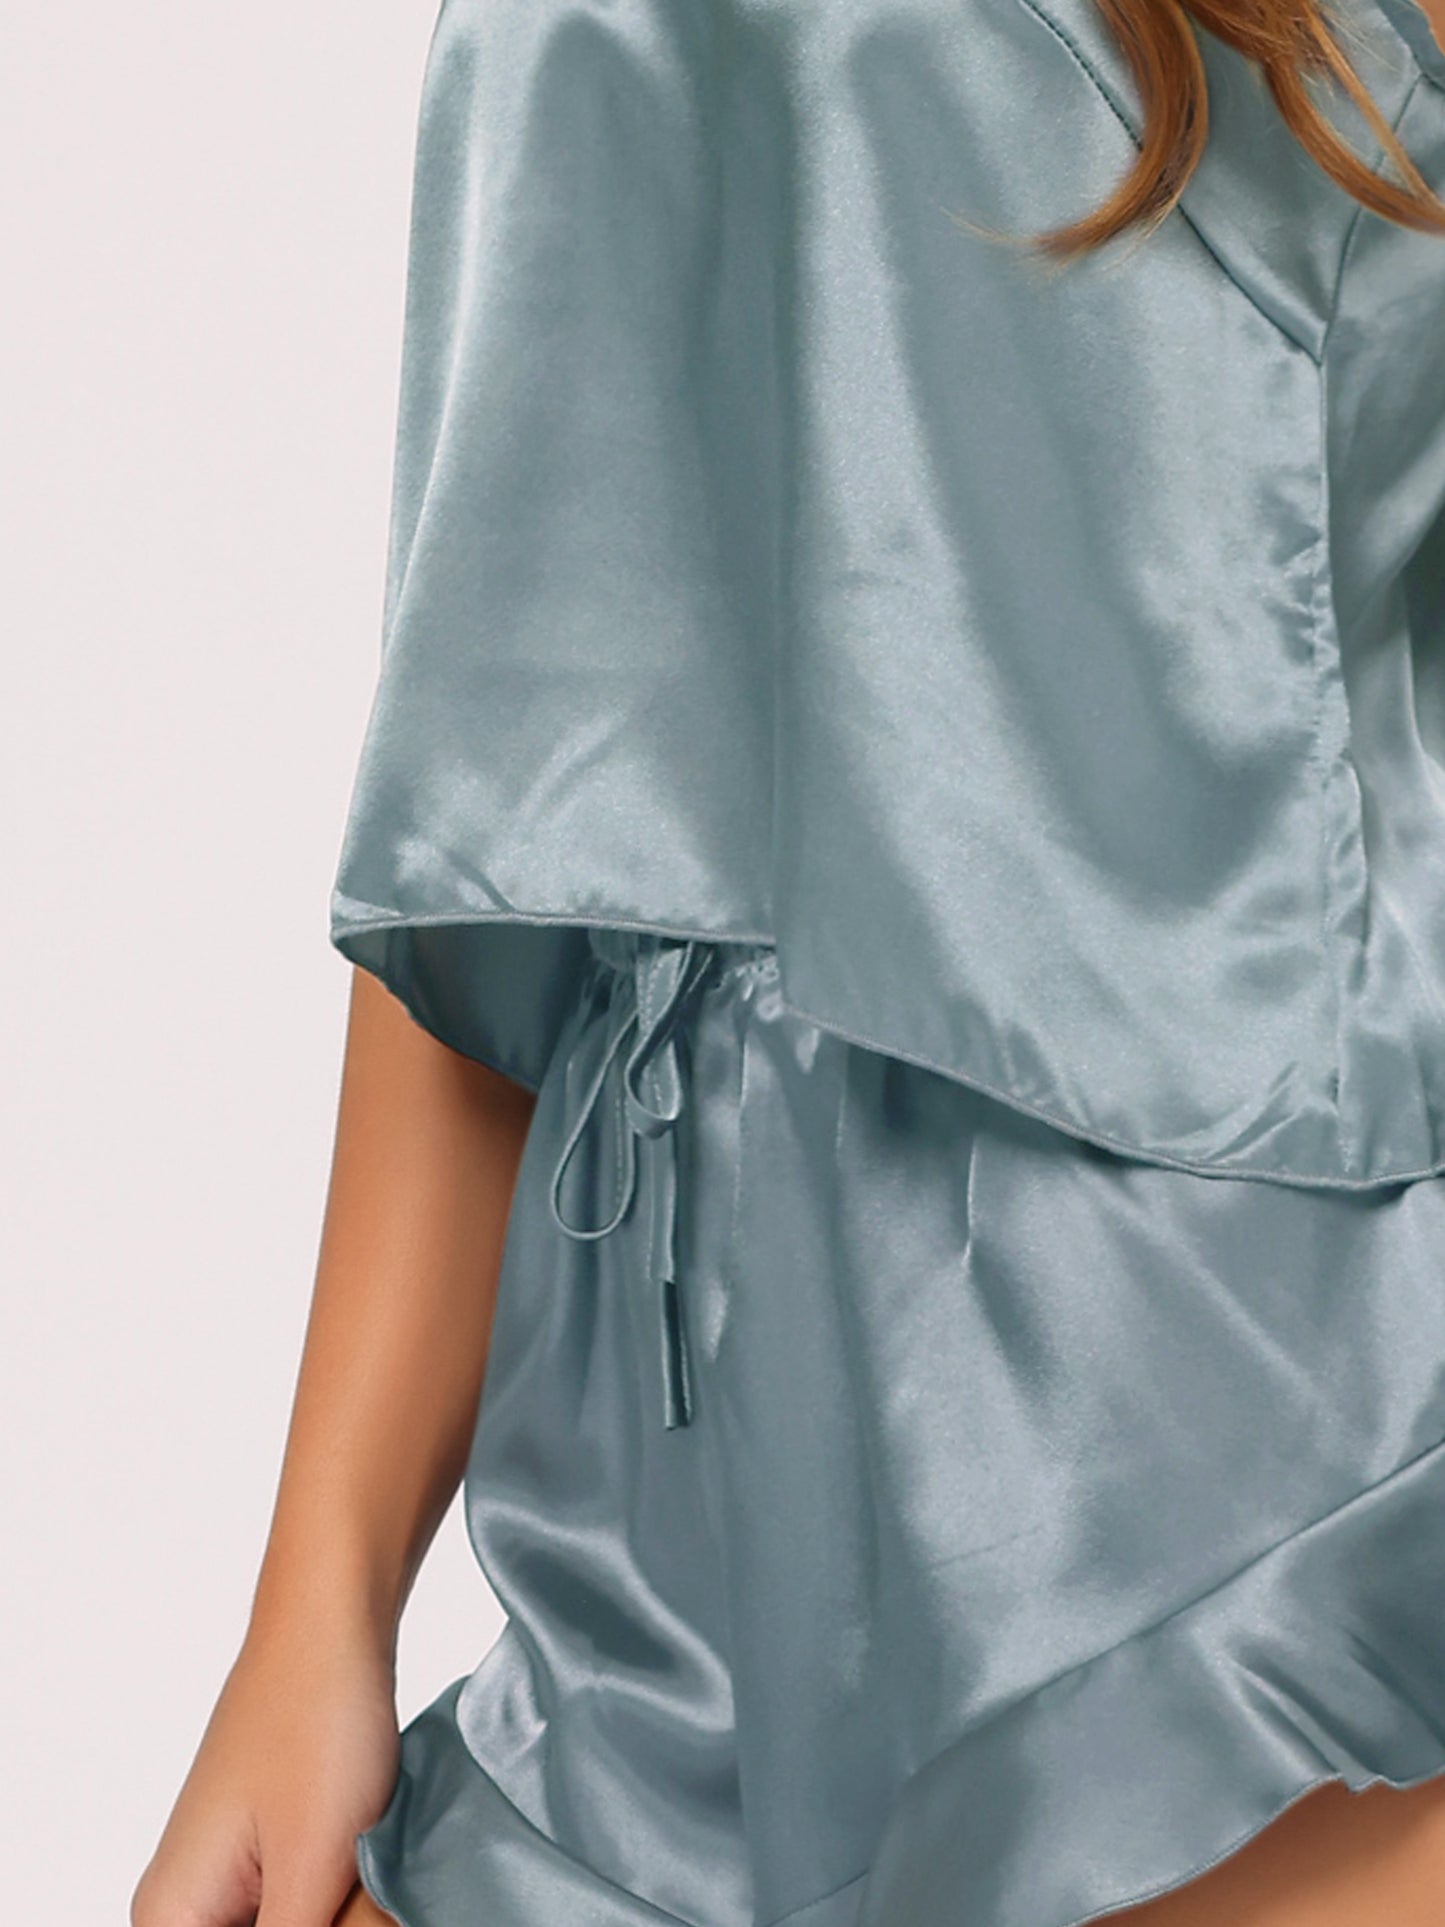 cheibear Satin Lingerie Cami Tops Shorts Sleepwear Pajamas Sets Gray Blue